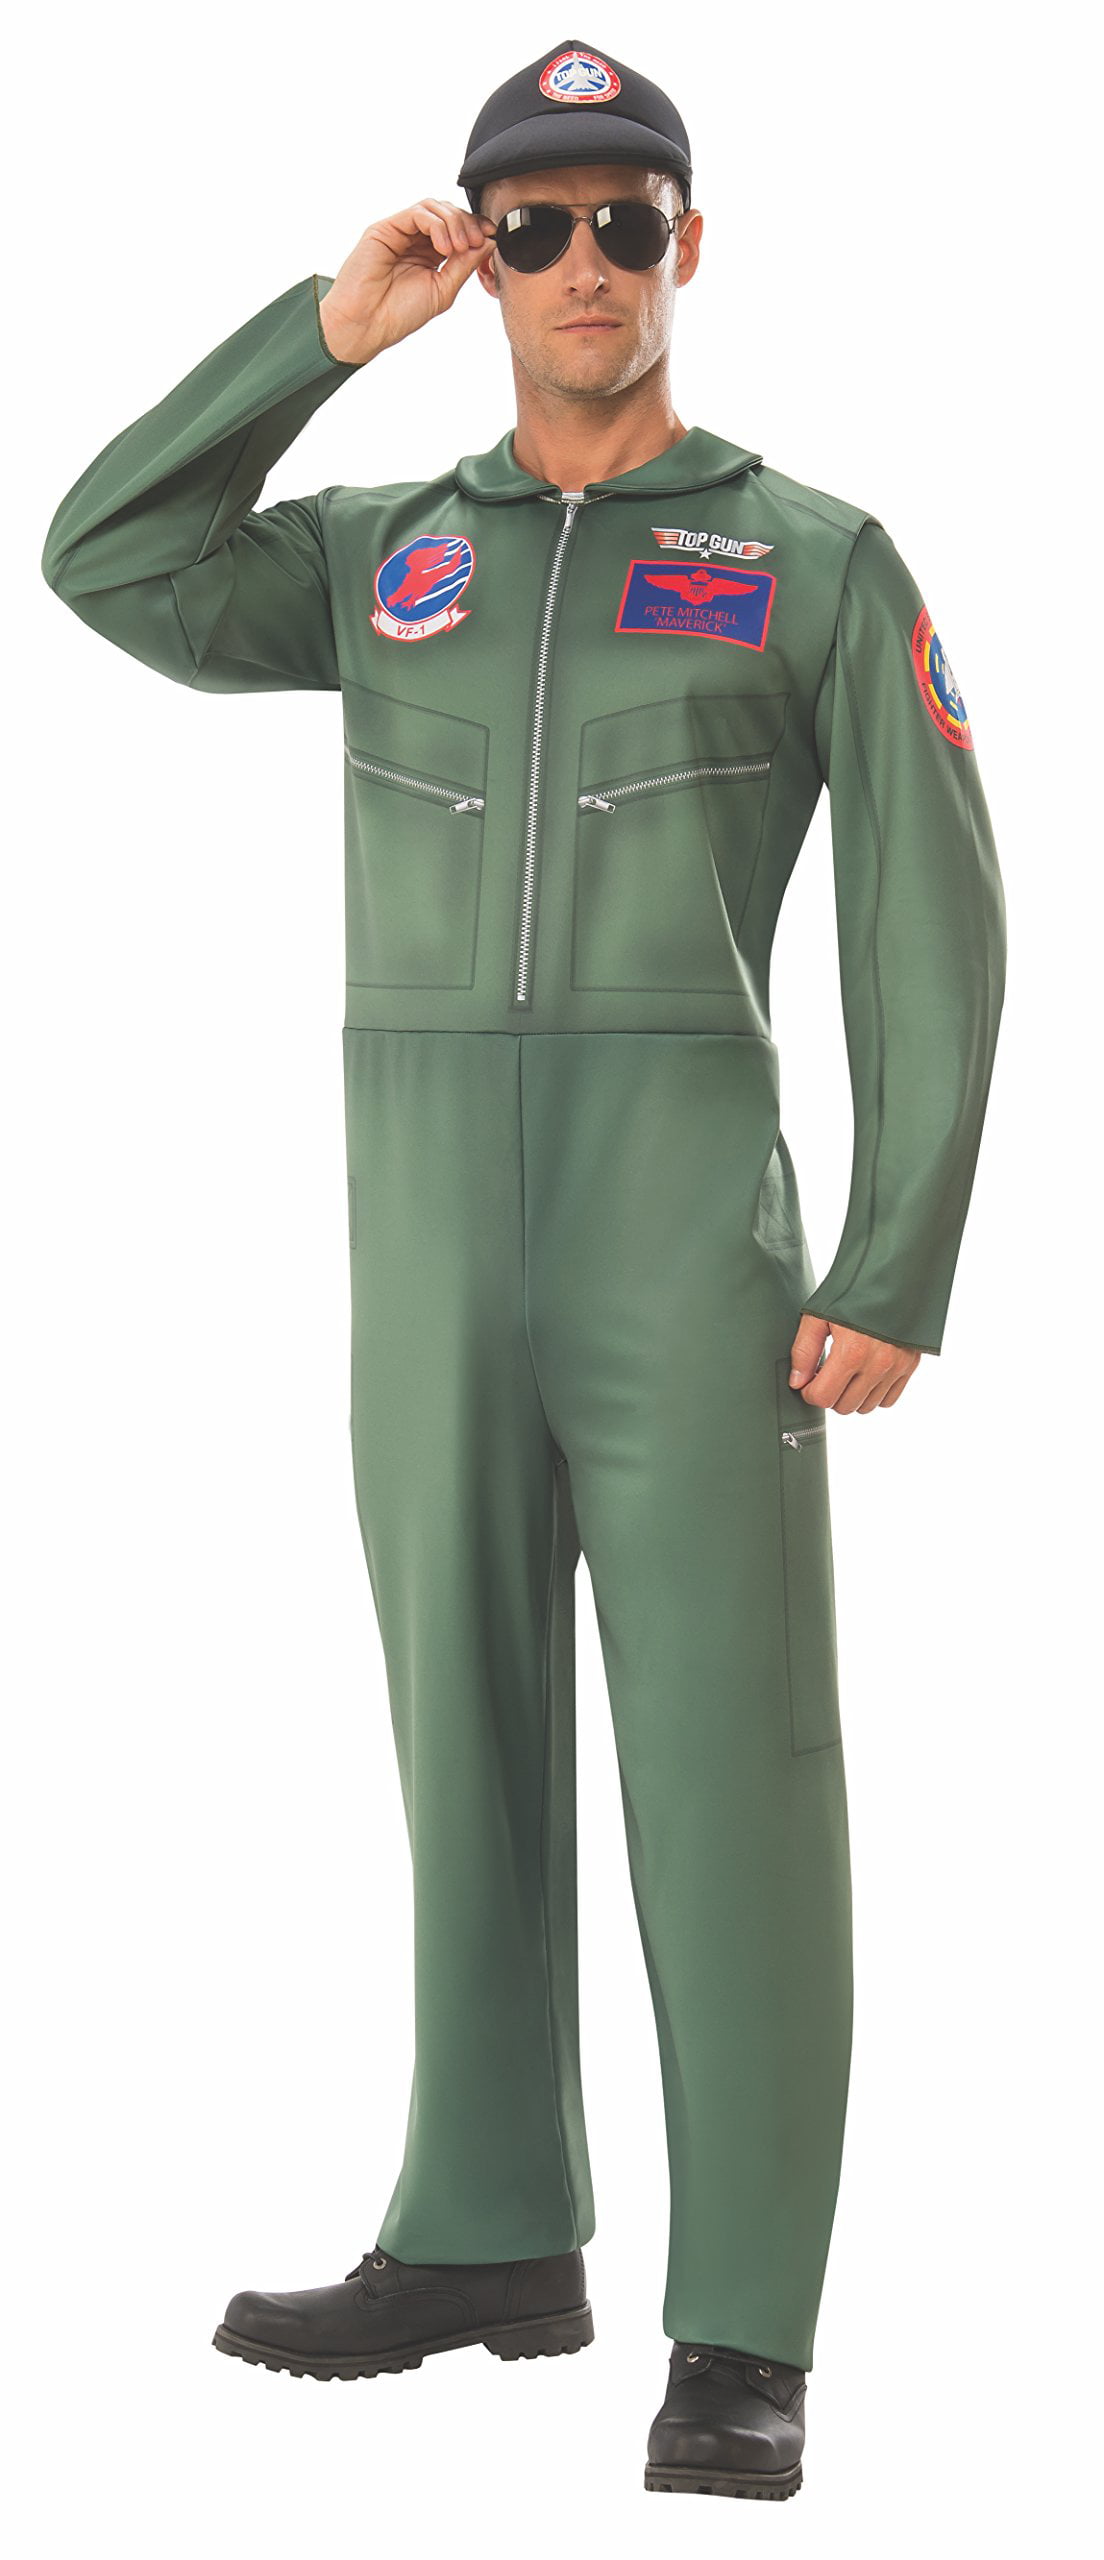 Olive Green Halloween Party City Top Gun: Maverick Flight Costume for Women Catsuit with Zipper